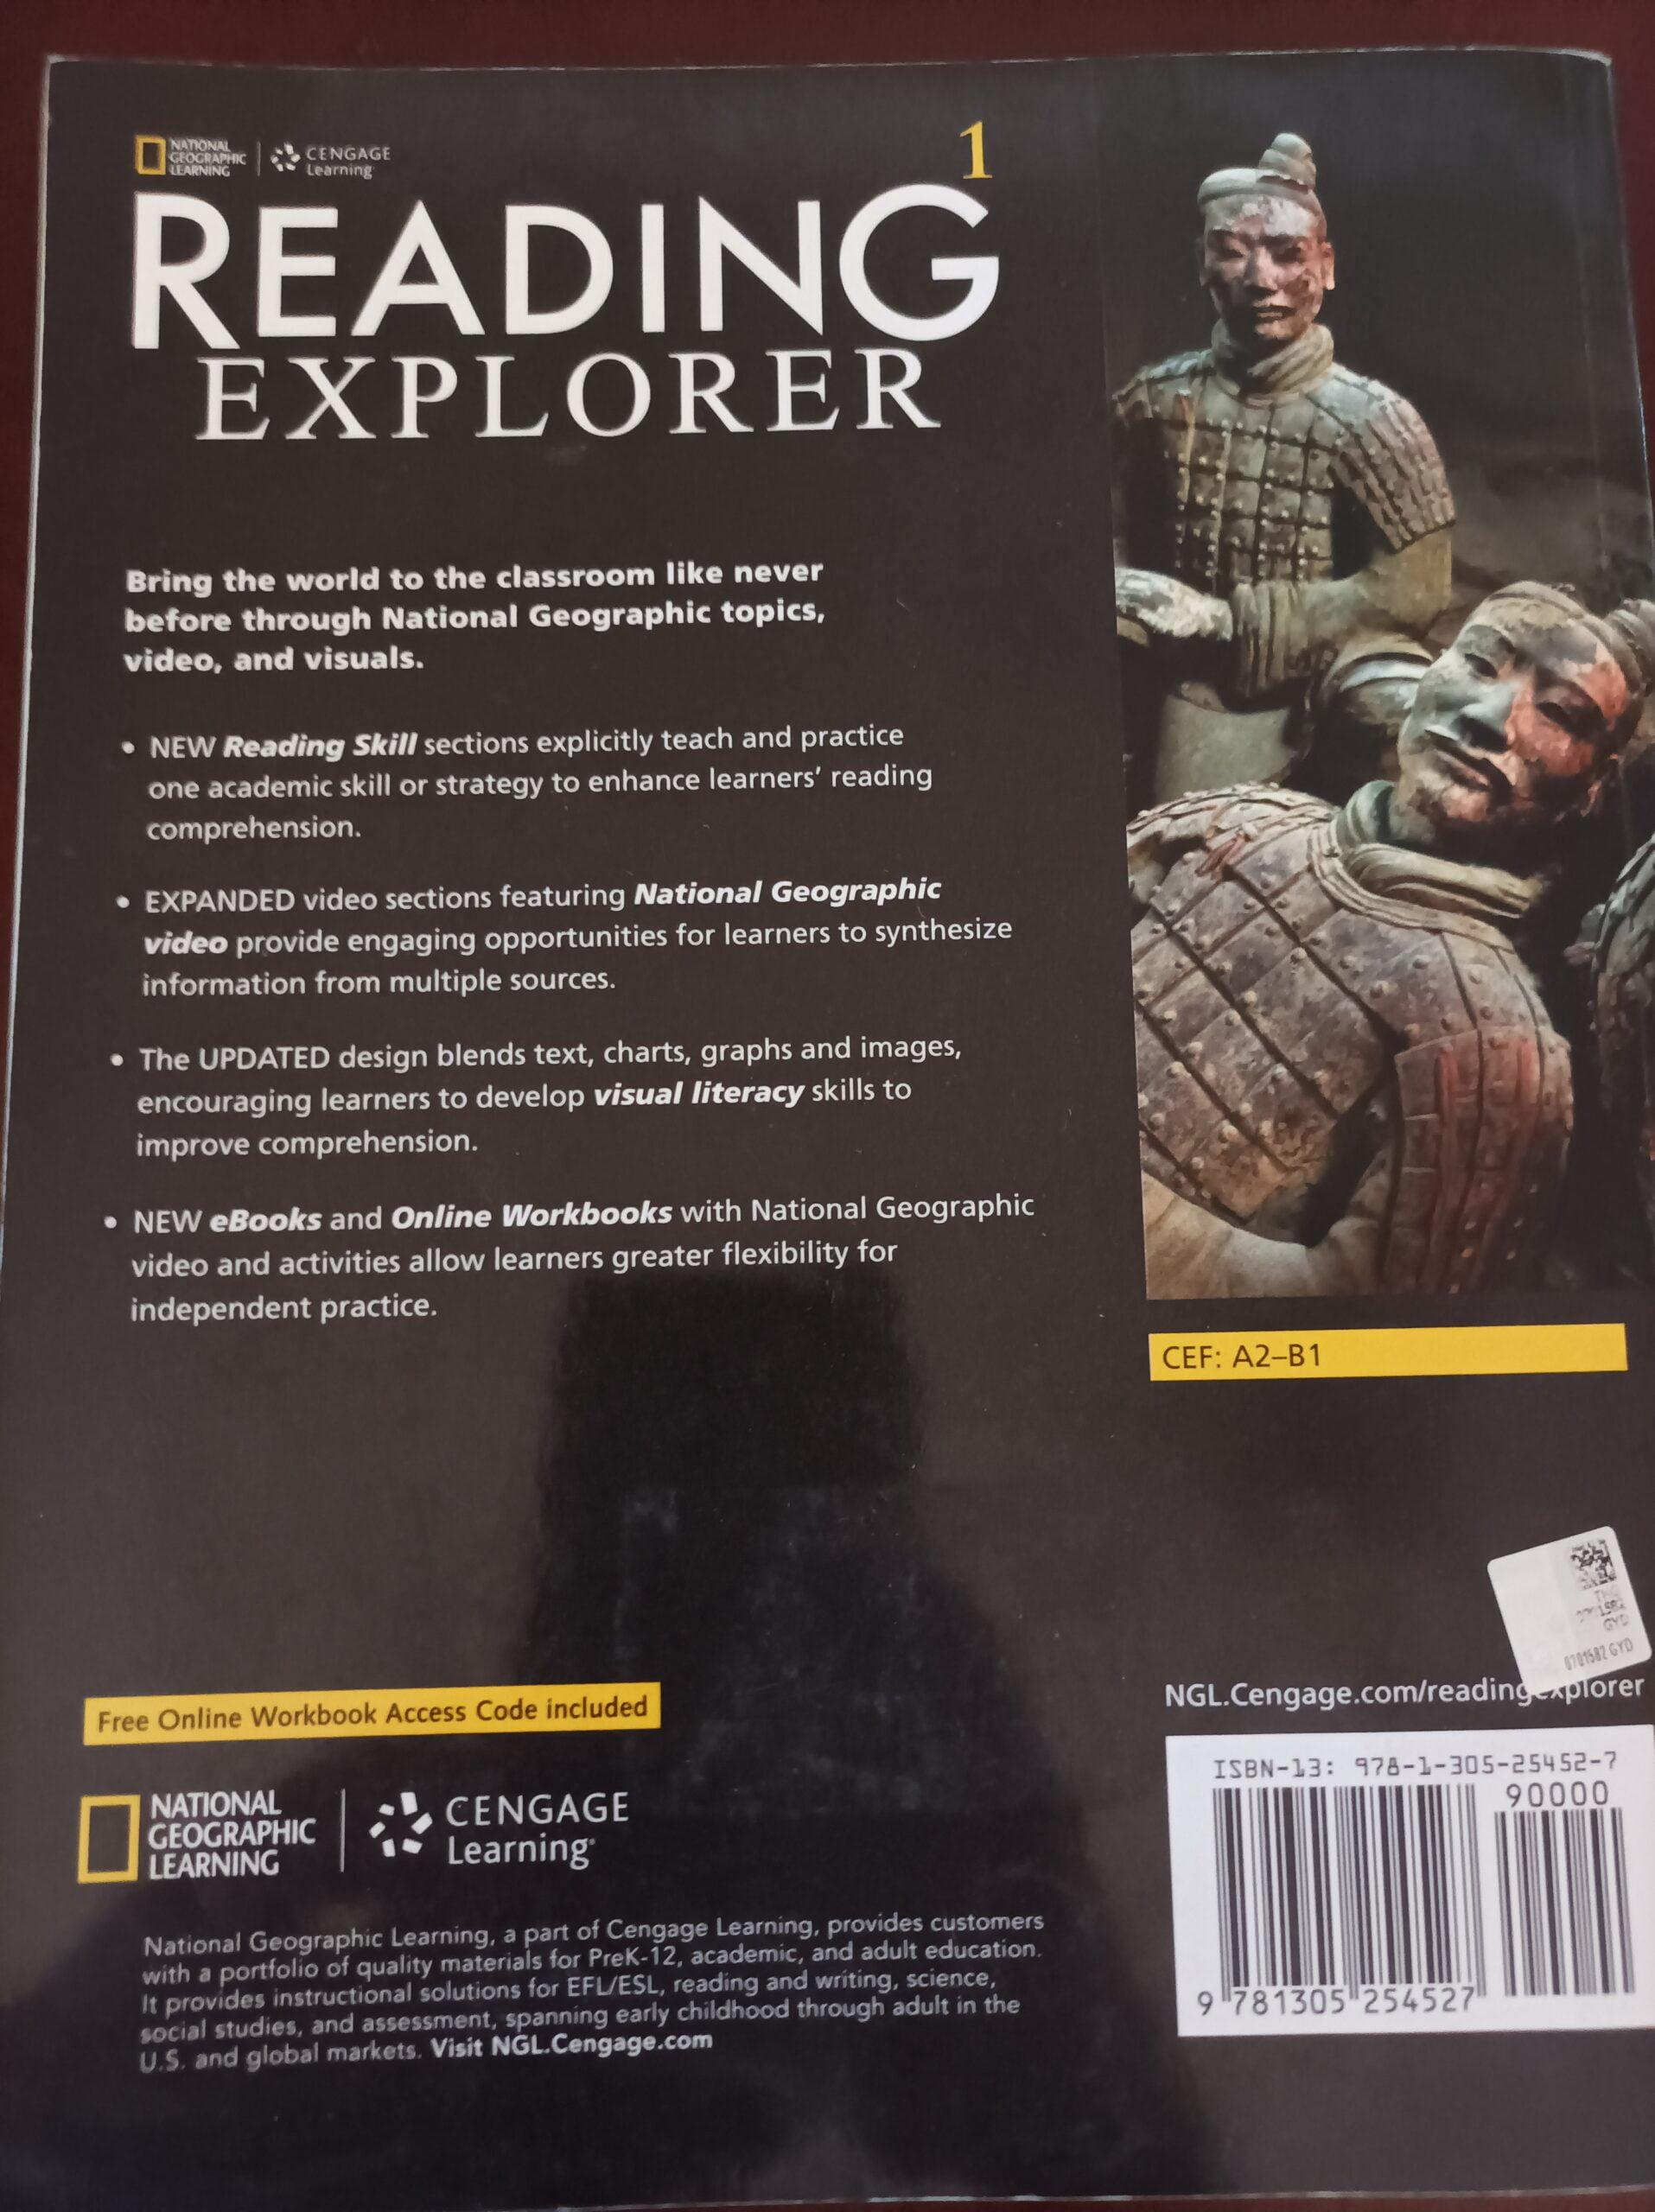 Reading Explorer Second Edition